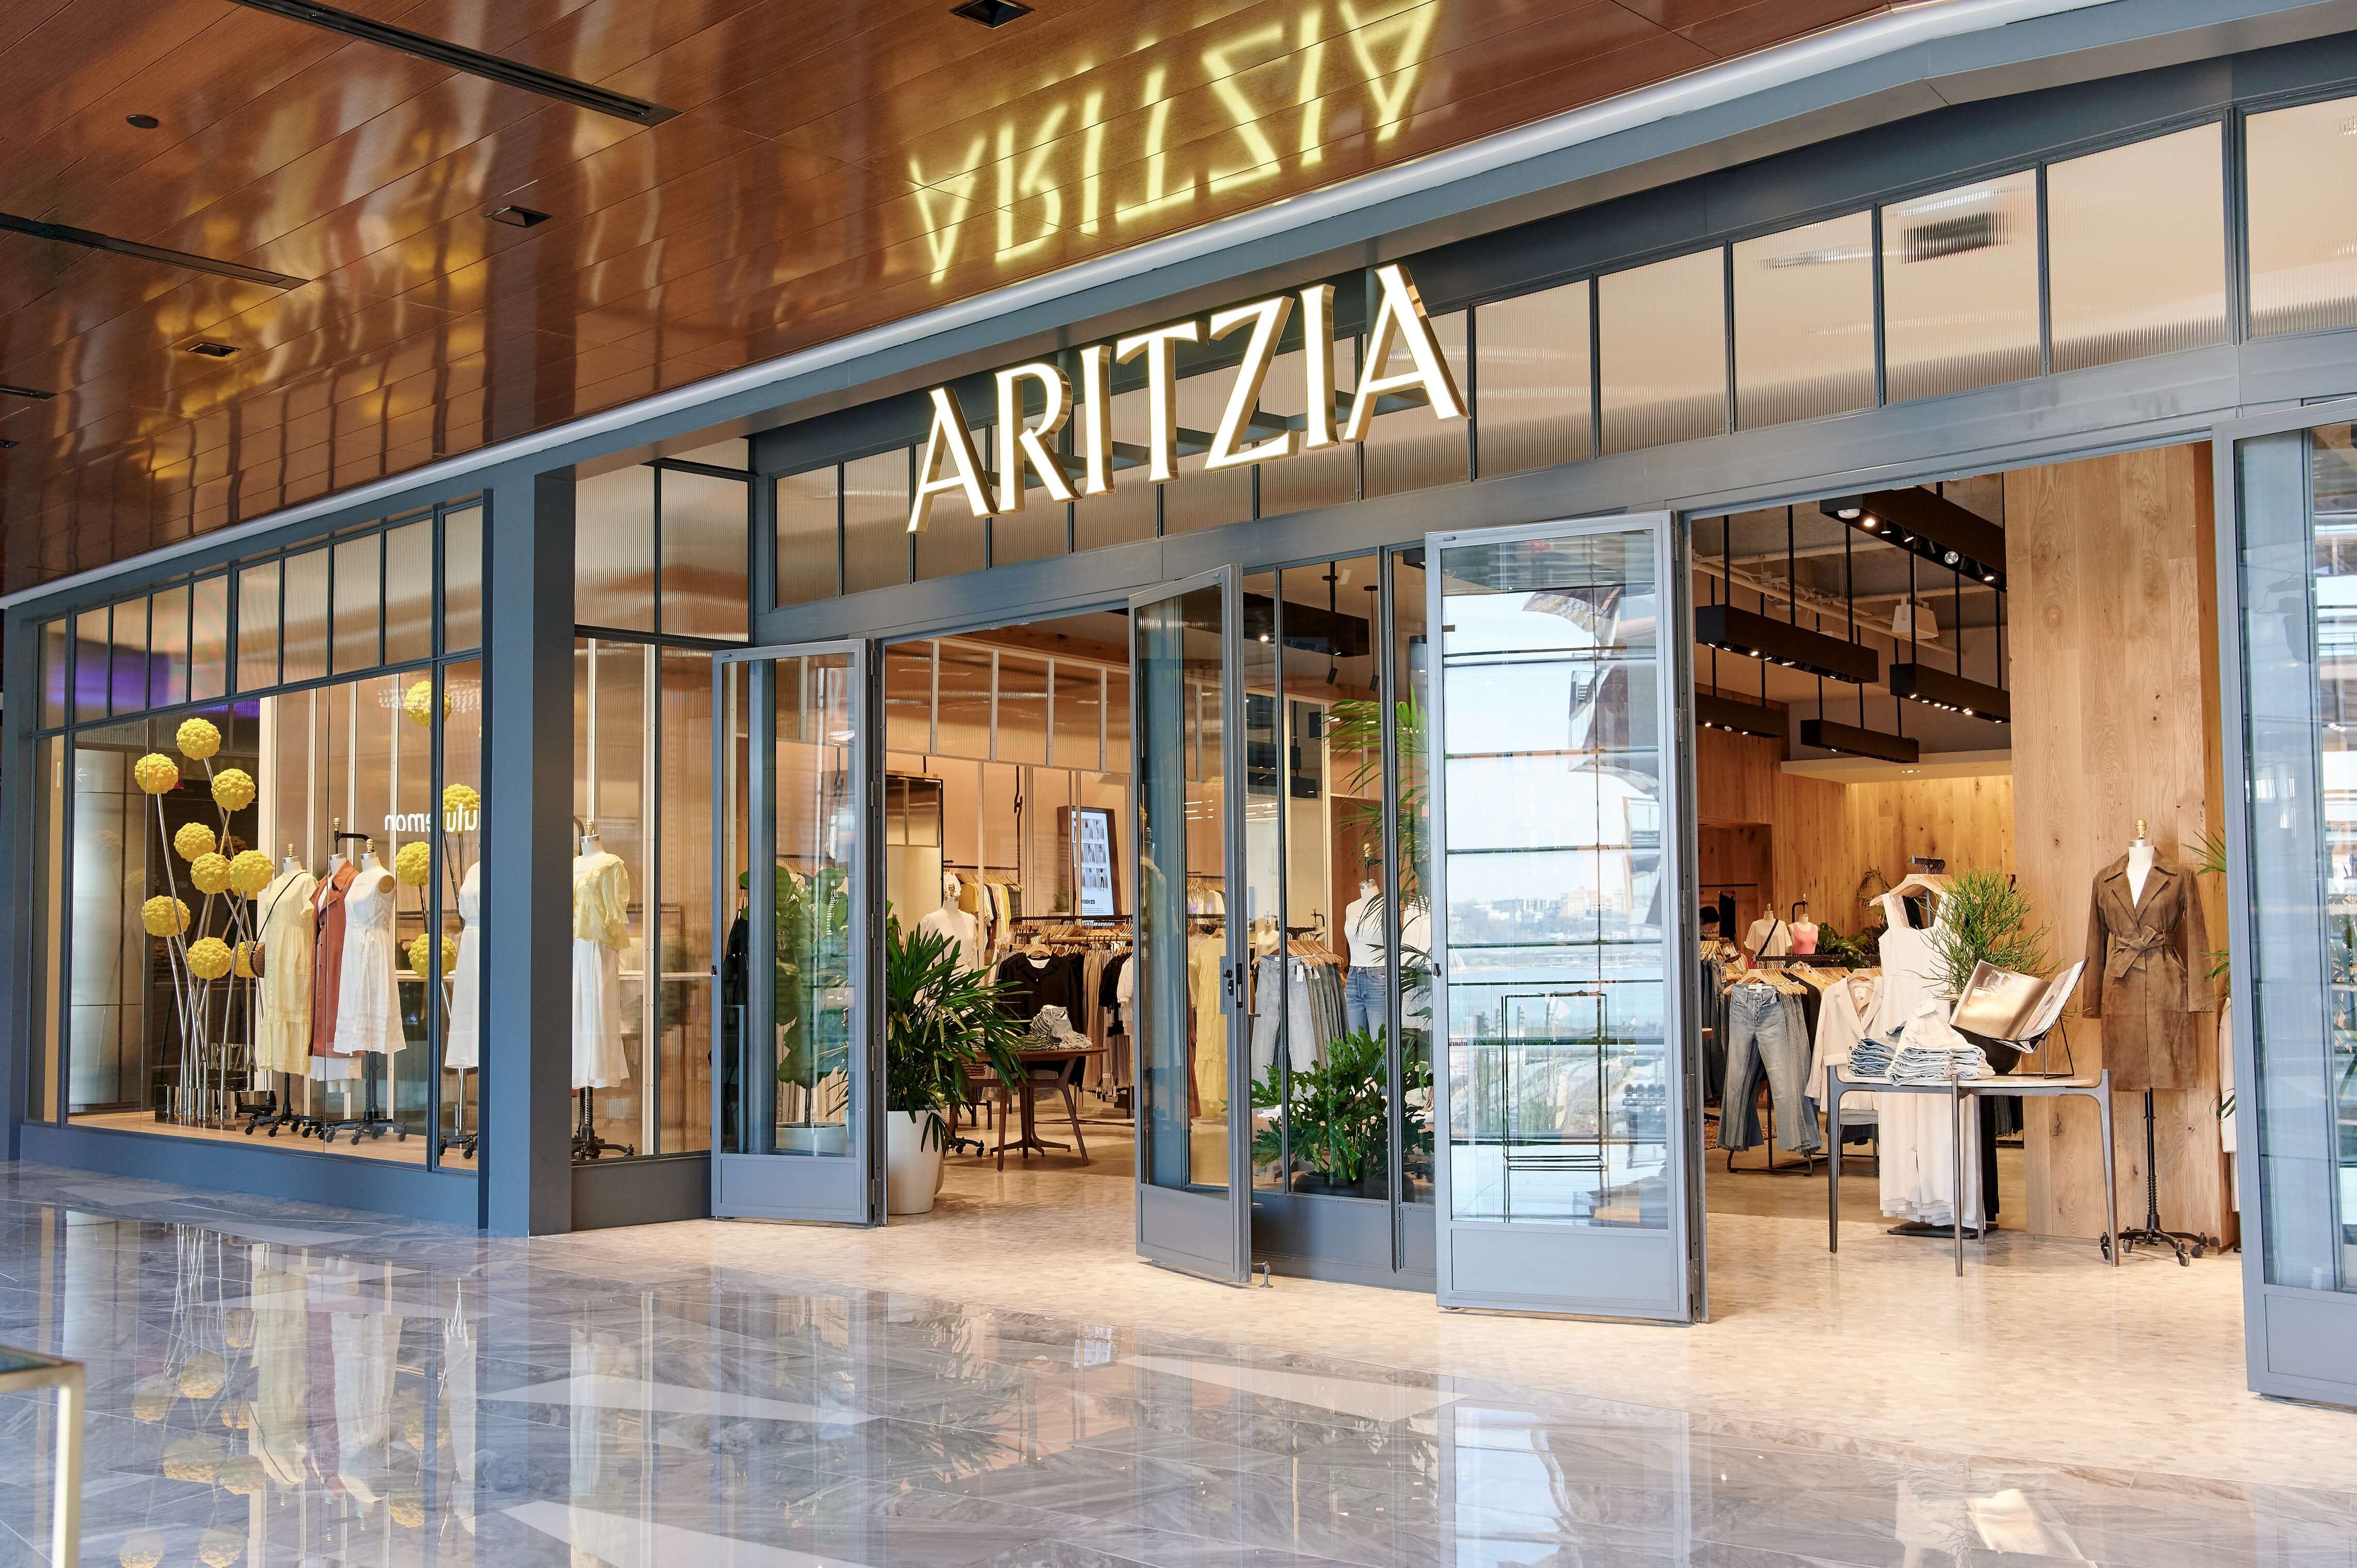 Inside the Aritzia Warehouse Sale: Is it worth it? (PHOTOS/VIDEO